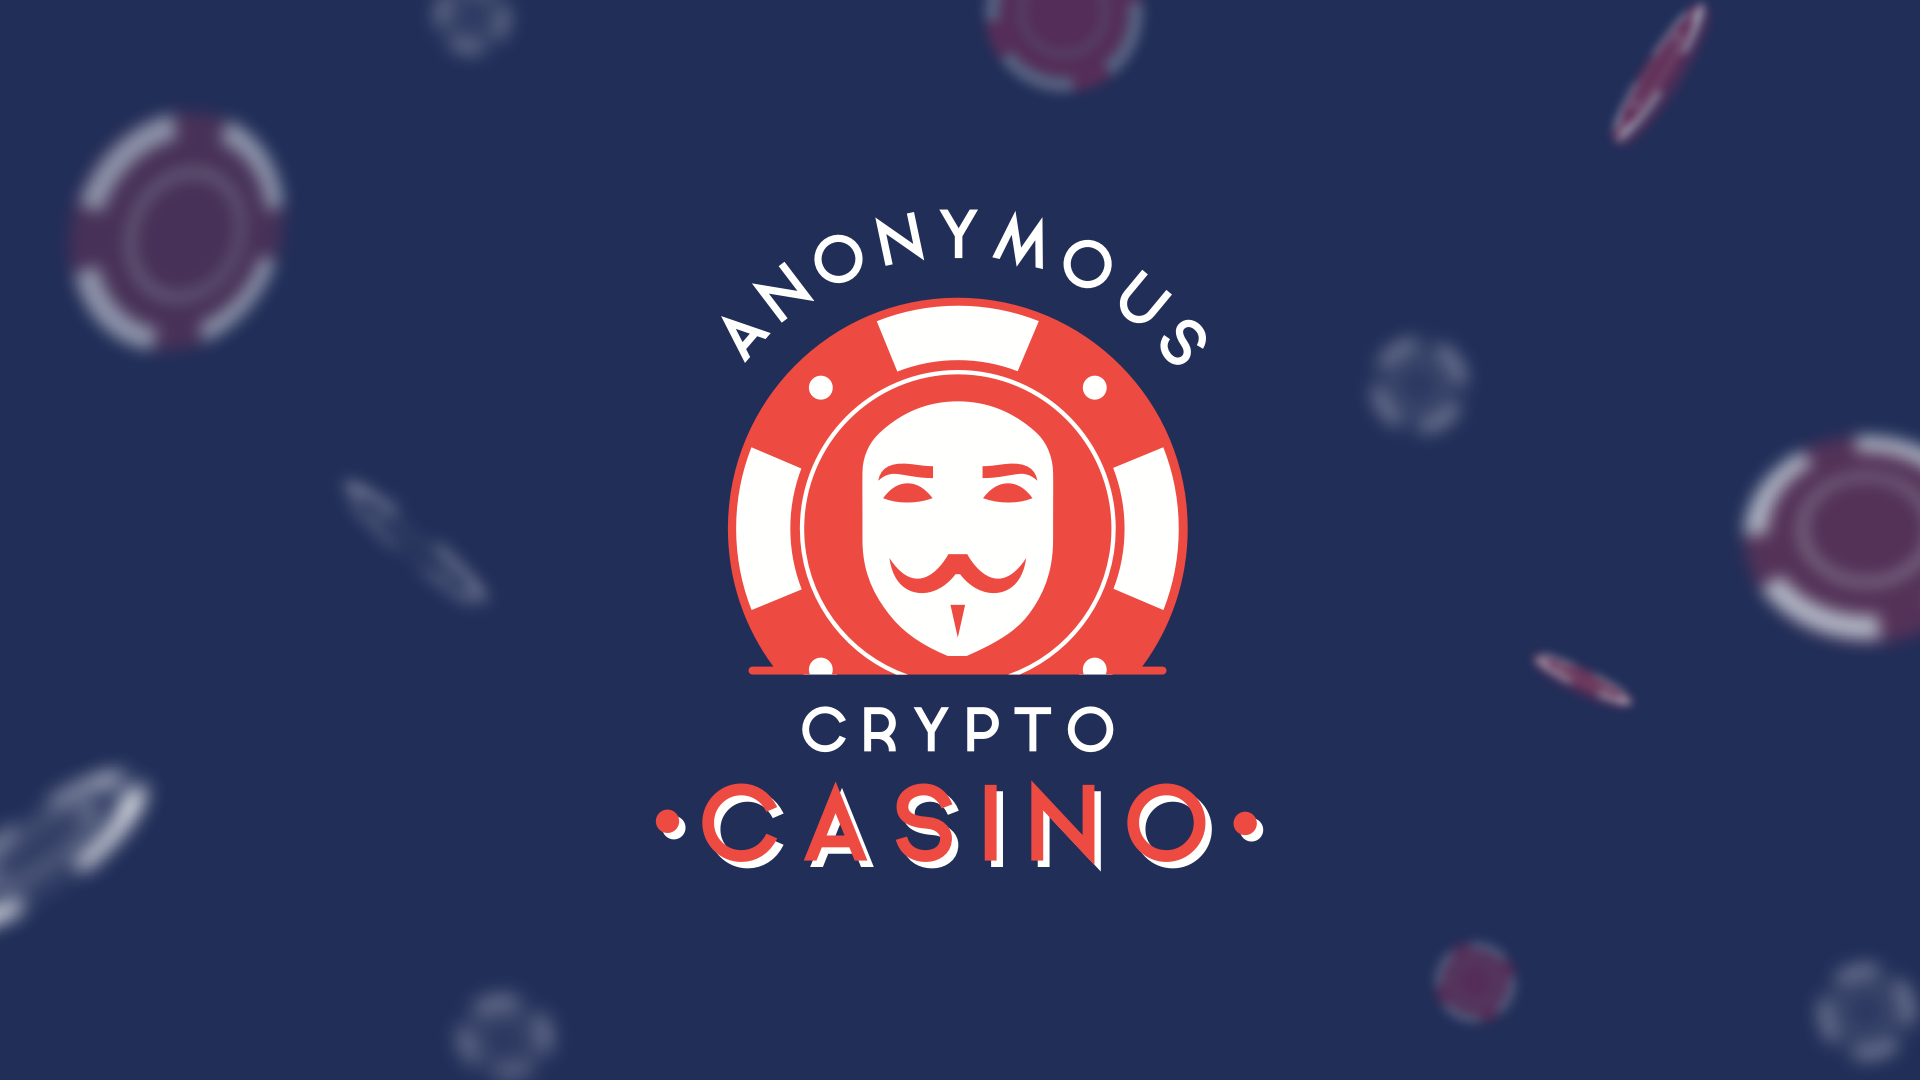 Casino deposit amex instant withdraw bitcoin easy verify